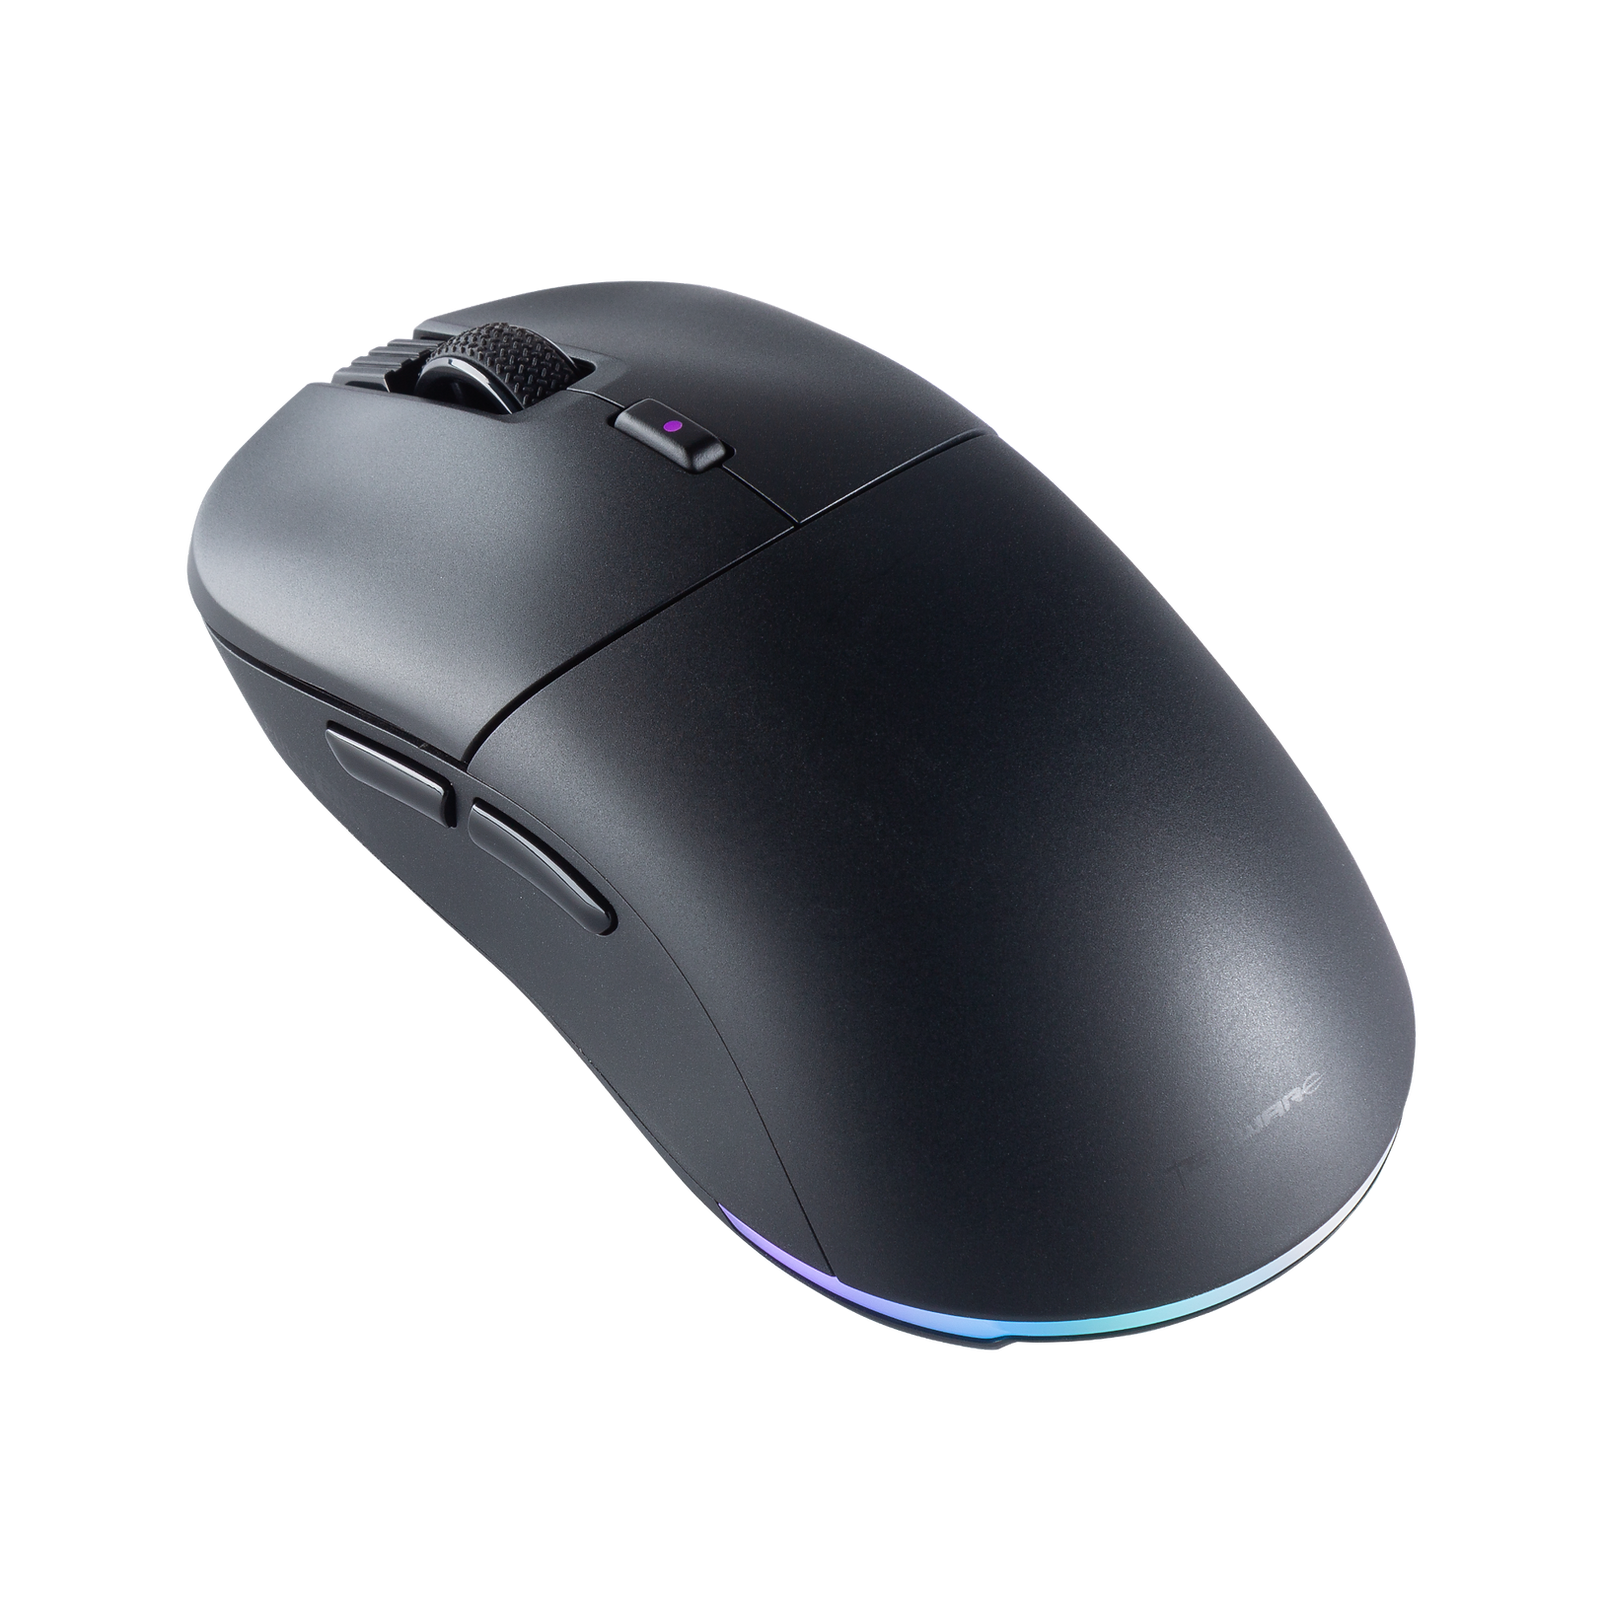 Tecware Pulse Elite | 19K DPI Hotswap Wireless Gaming Mouse (Black)